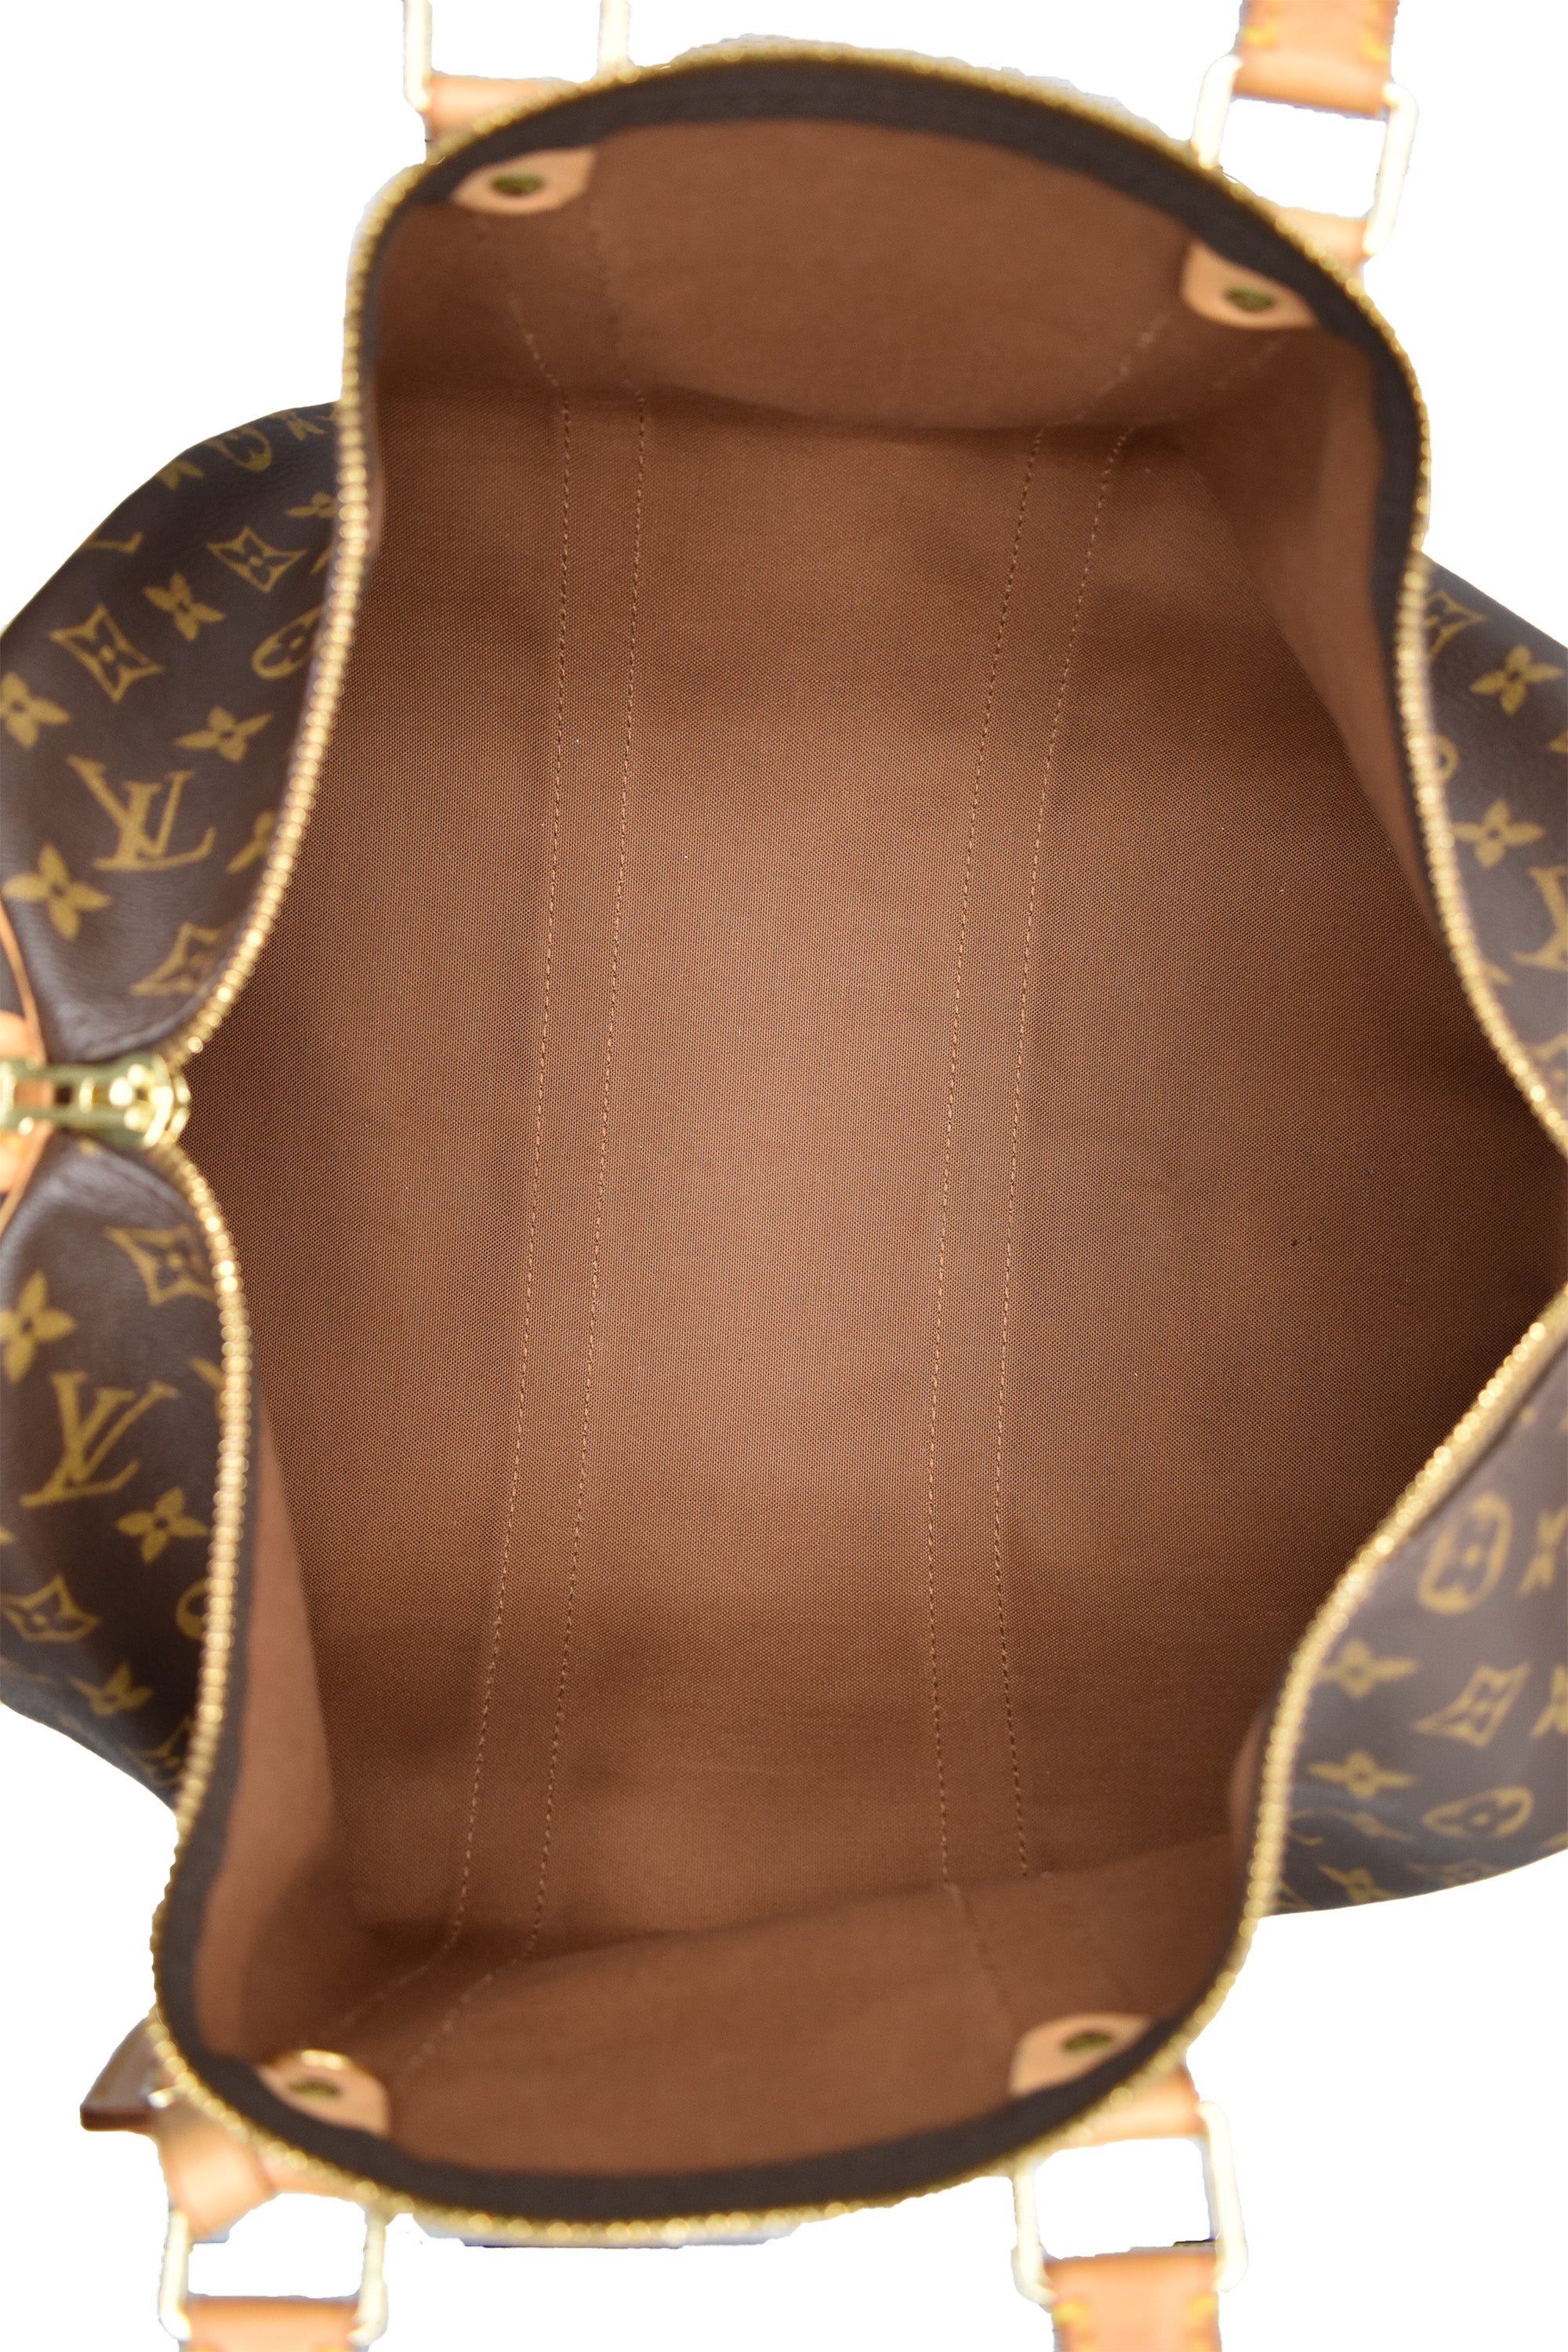 Louis Vuitton Monogram Sac Souple Boston Bag 910lv6  eBay